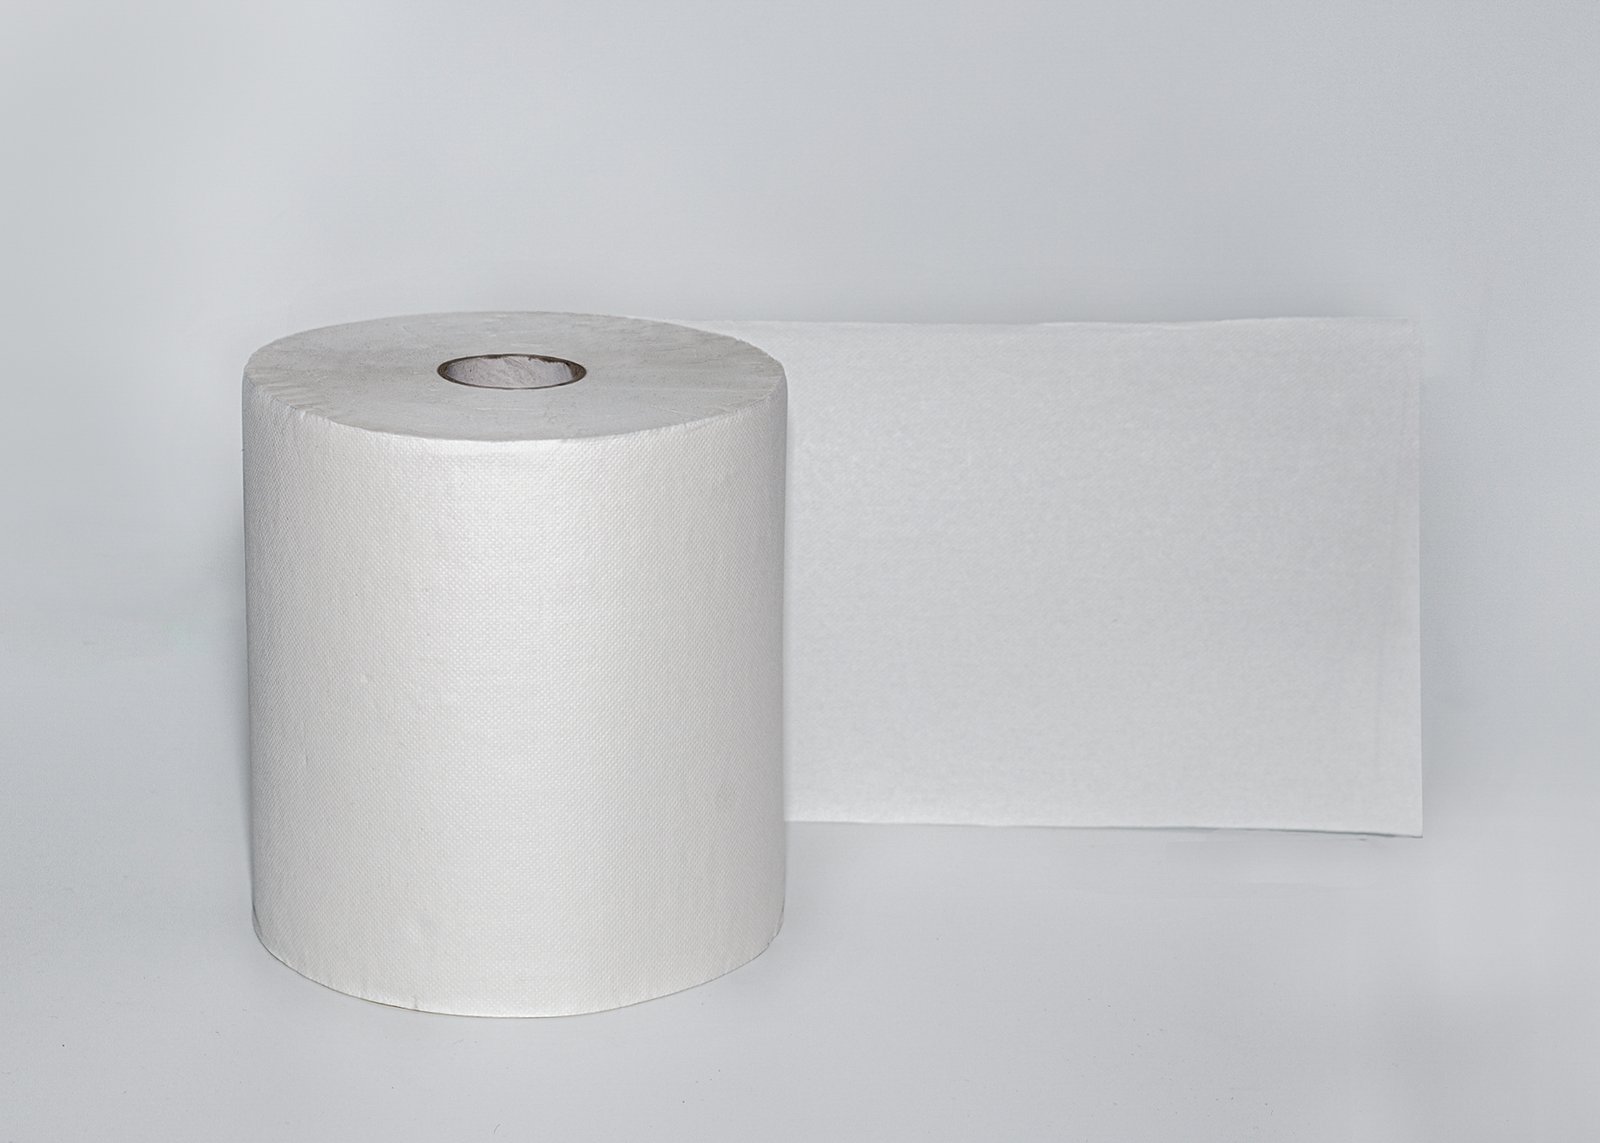 100% virgin wood pulp paper towel 27gsm 1ply 20cmx170m roll dia18cm core dia4.5cm (3)